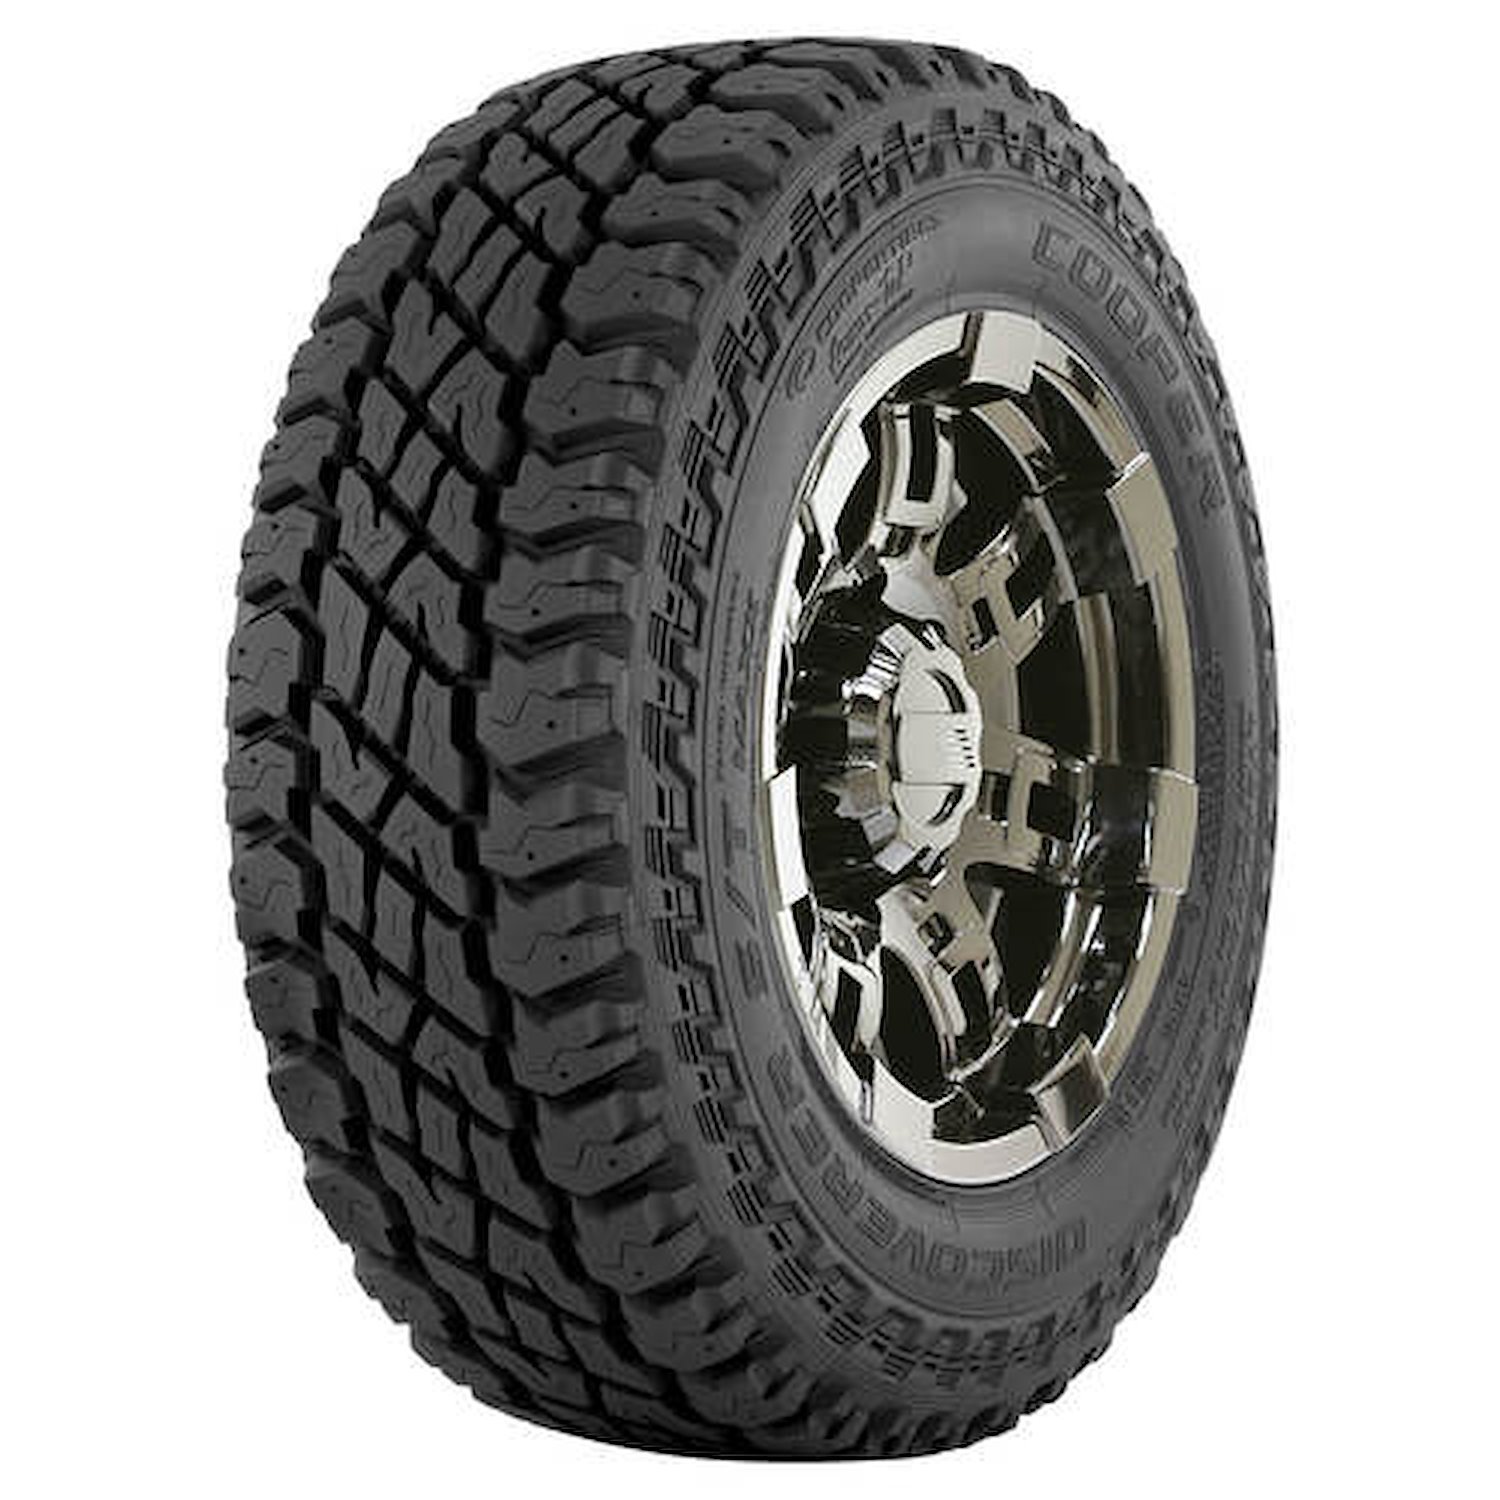 Discoverer S/T Maxx All-Terrain Tire, LT235/80R17